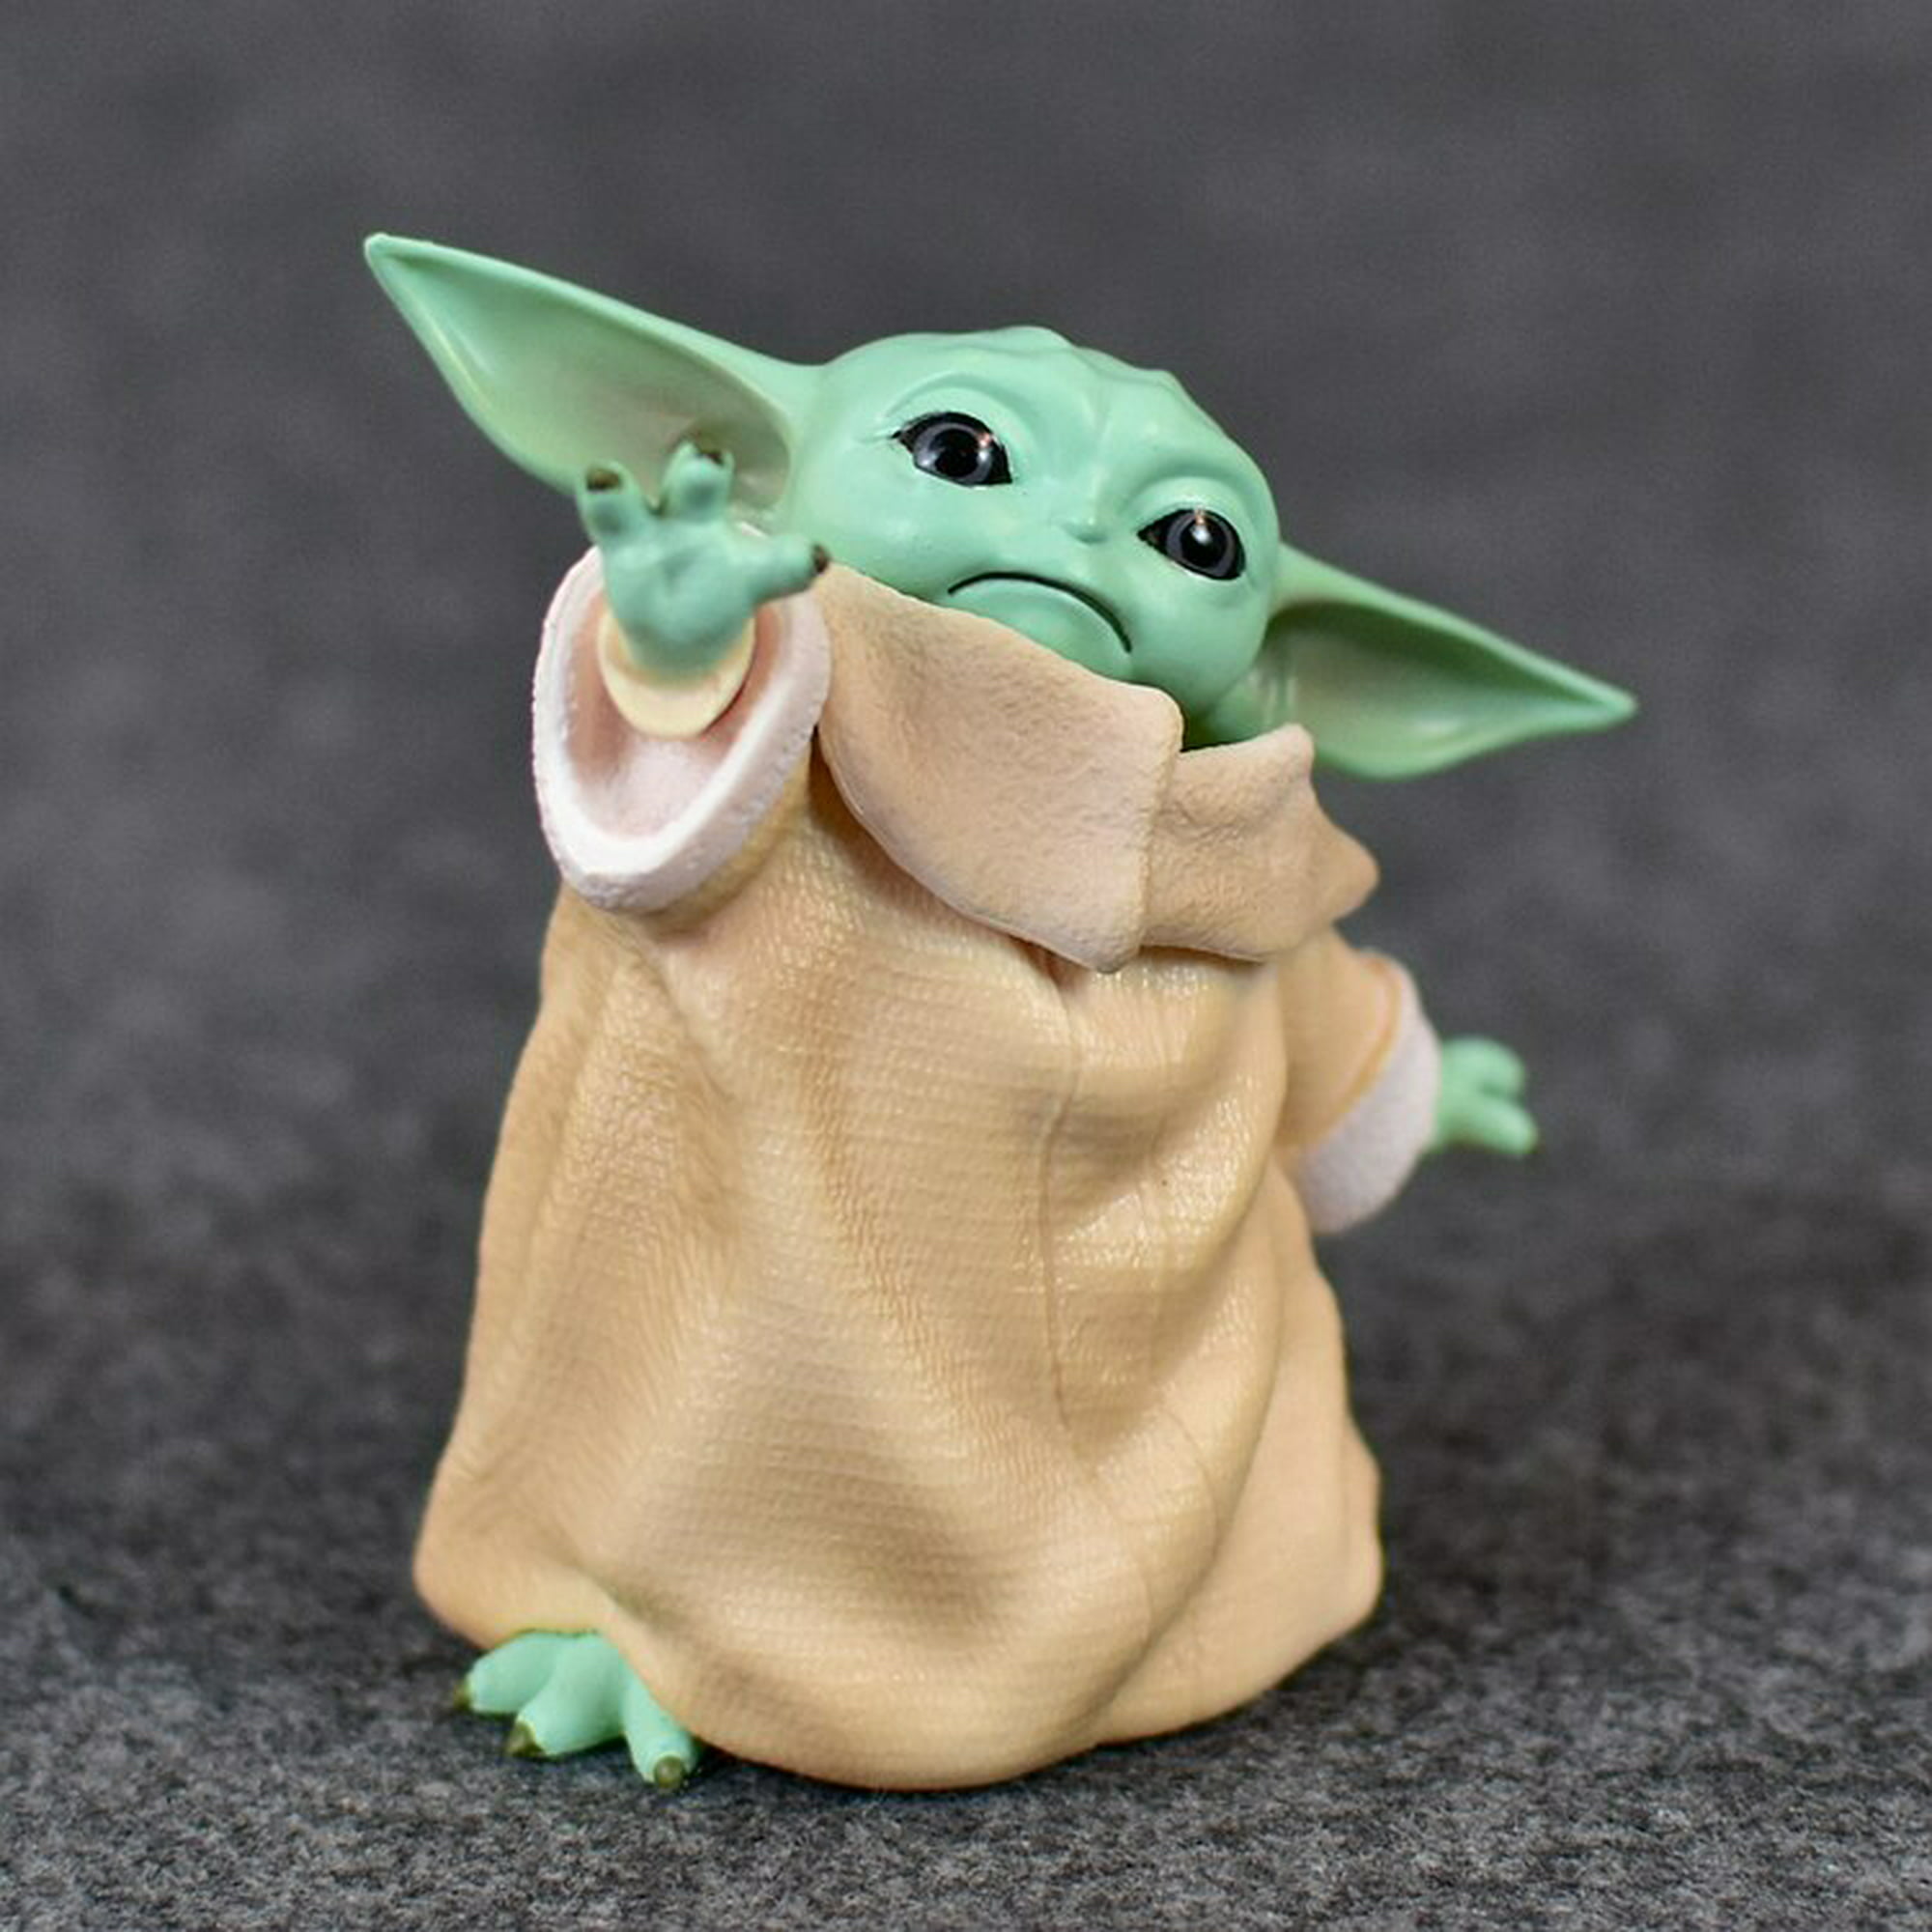 Grogu Mattel 3.0 Peluche Baby Yoda The Mandalorian Star Wars en Español 